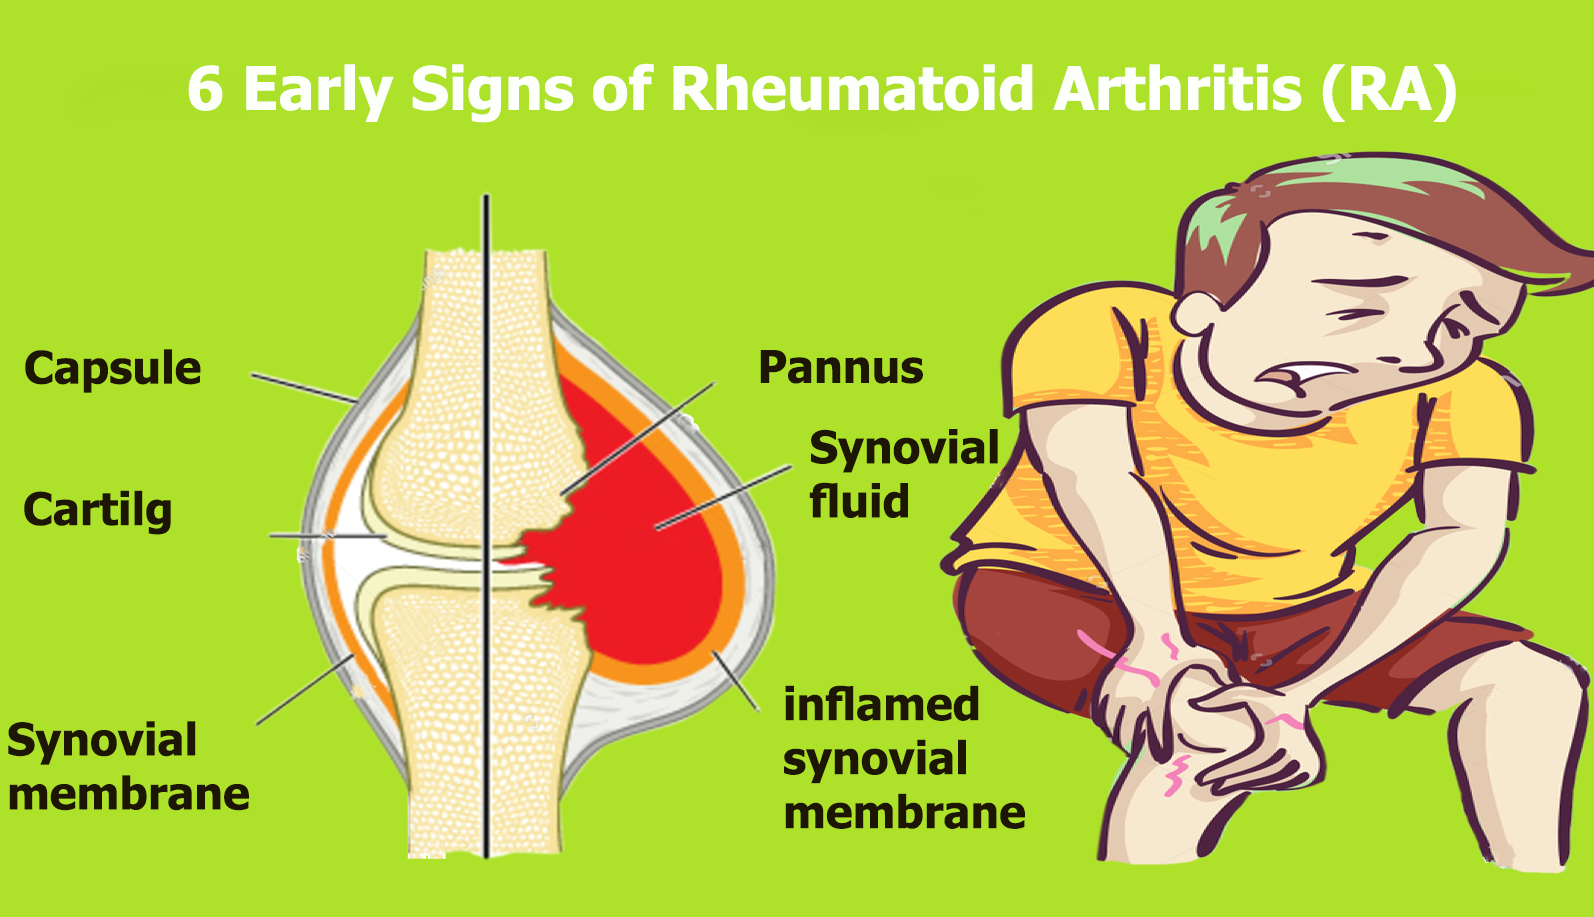 6 Early Signs of Rheumatoid Arthritis (RA)